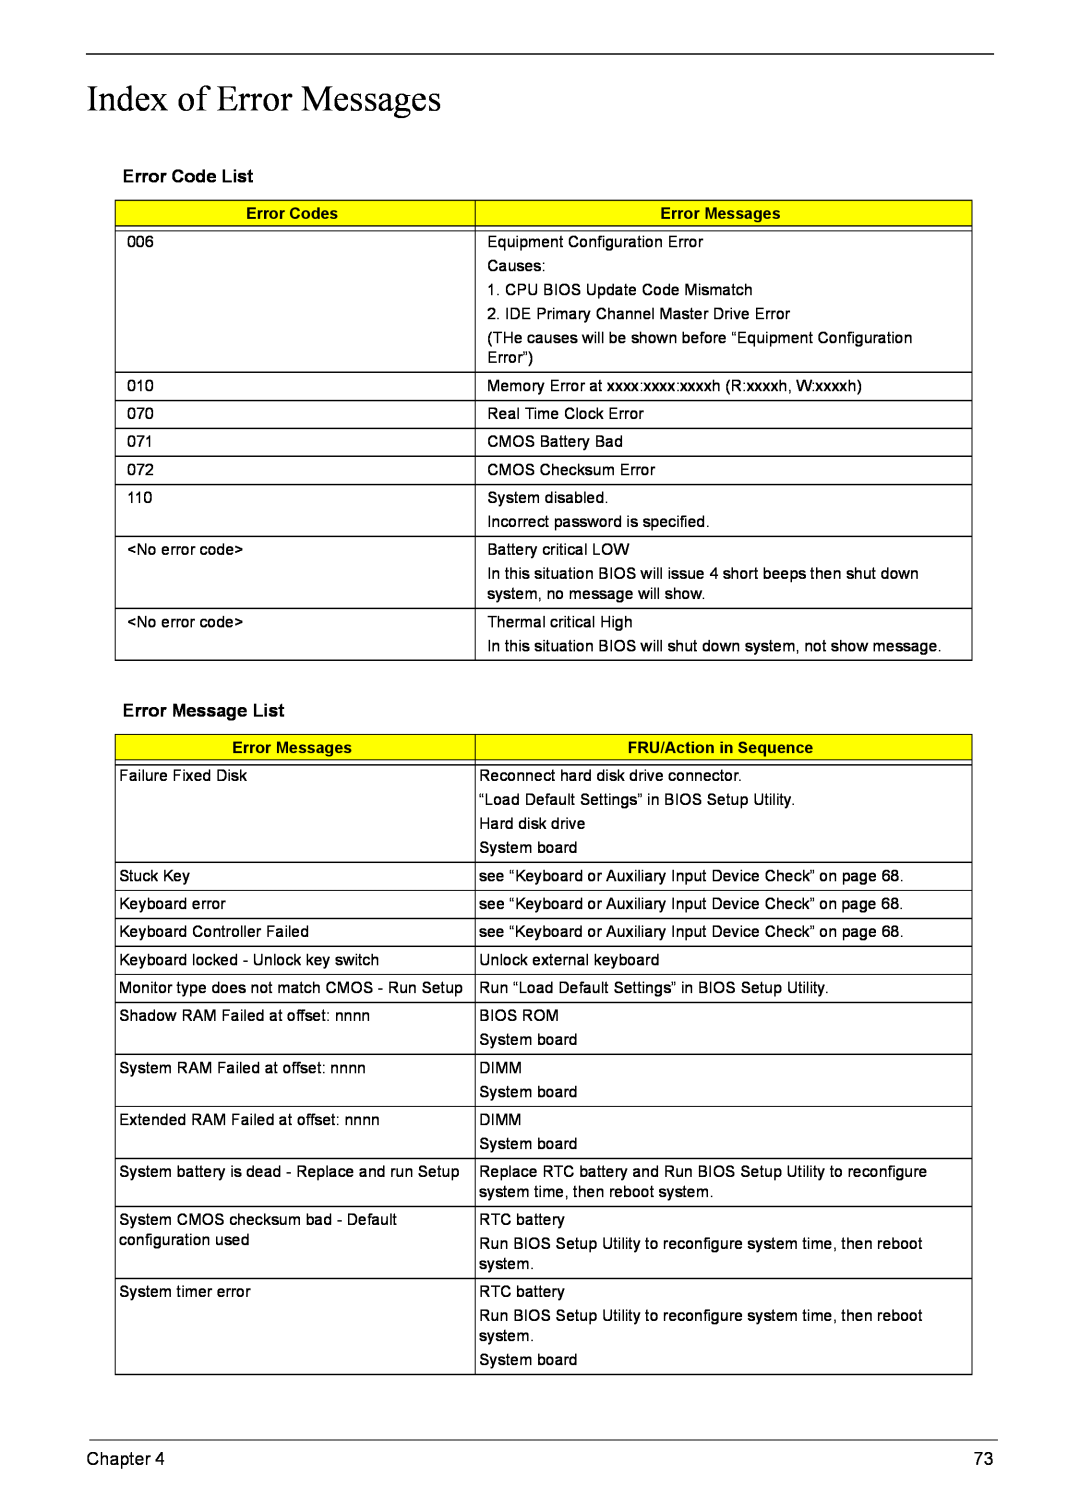 Acer 5920G Series manual Index of Error Messages, Error Code List, Error Message List 